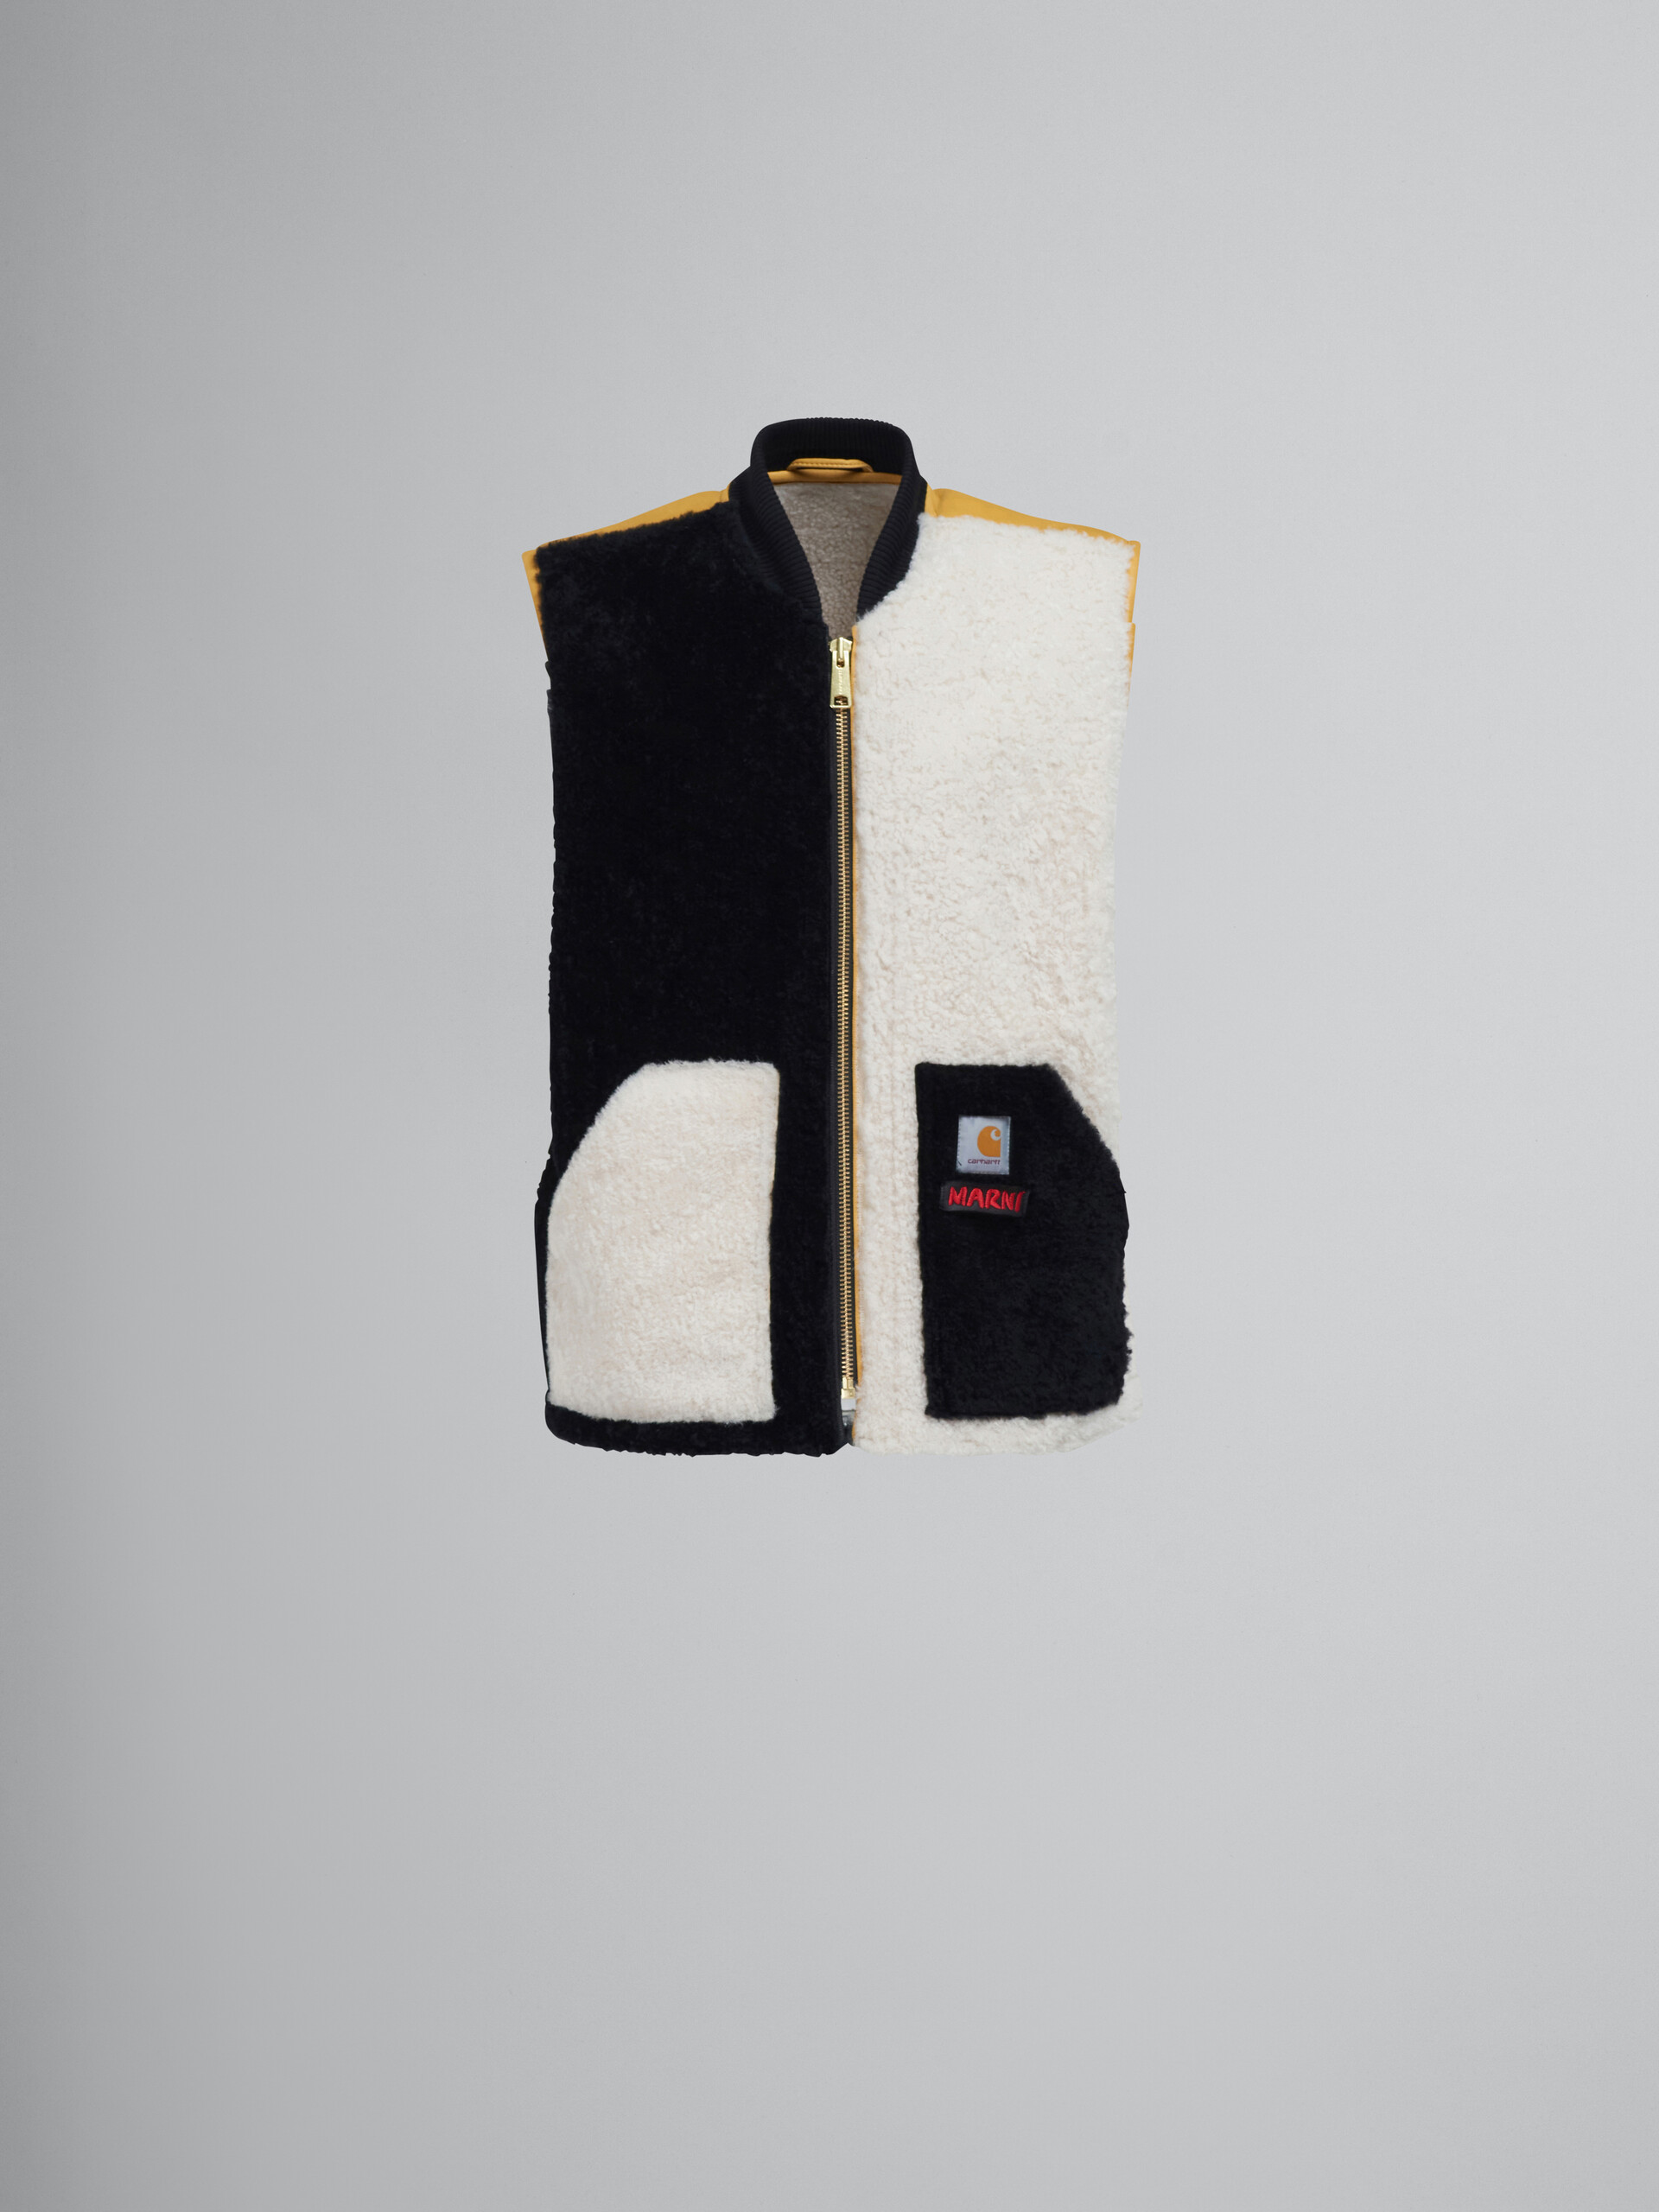 MARNI x CARHARTT WIP - black and white shearling gilet - Waistcoat - Image 1